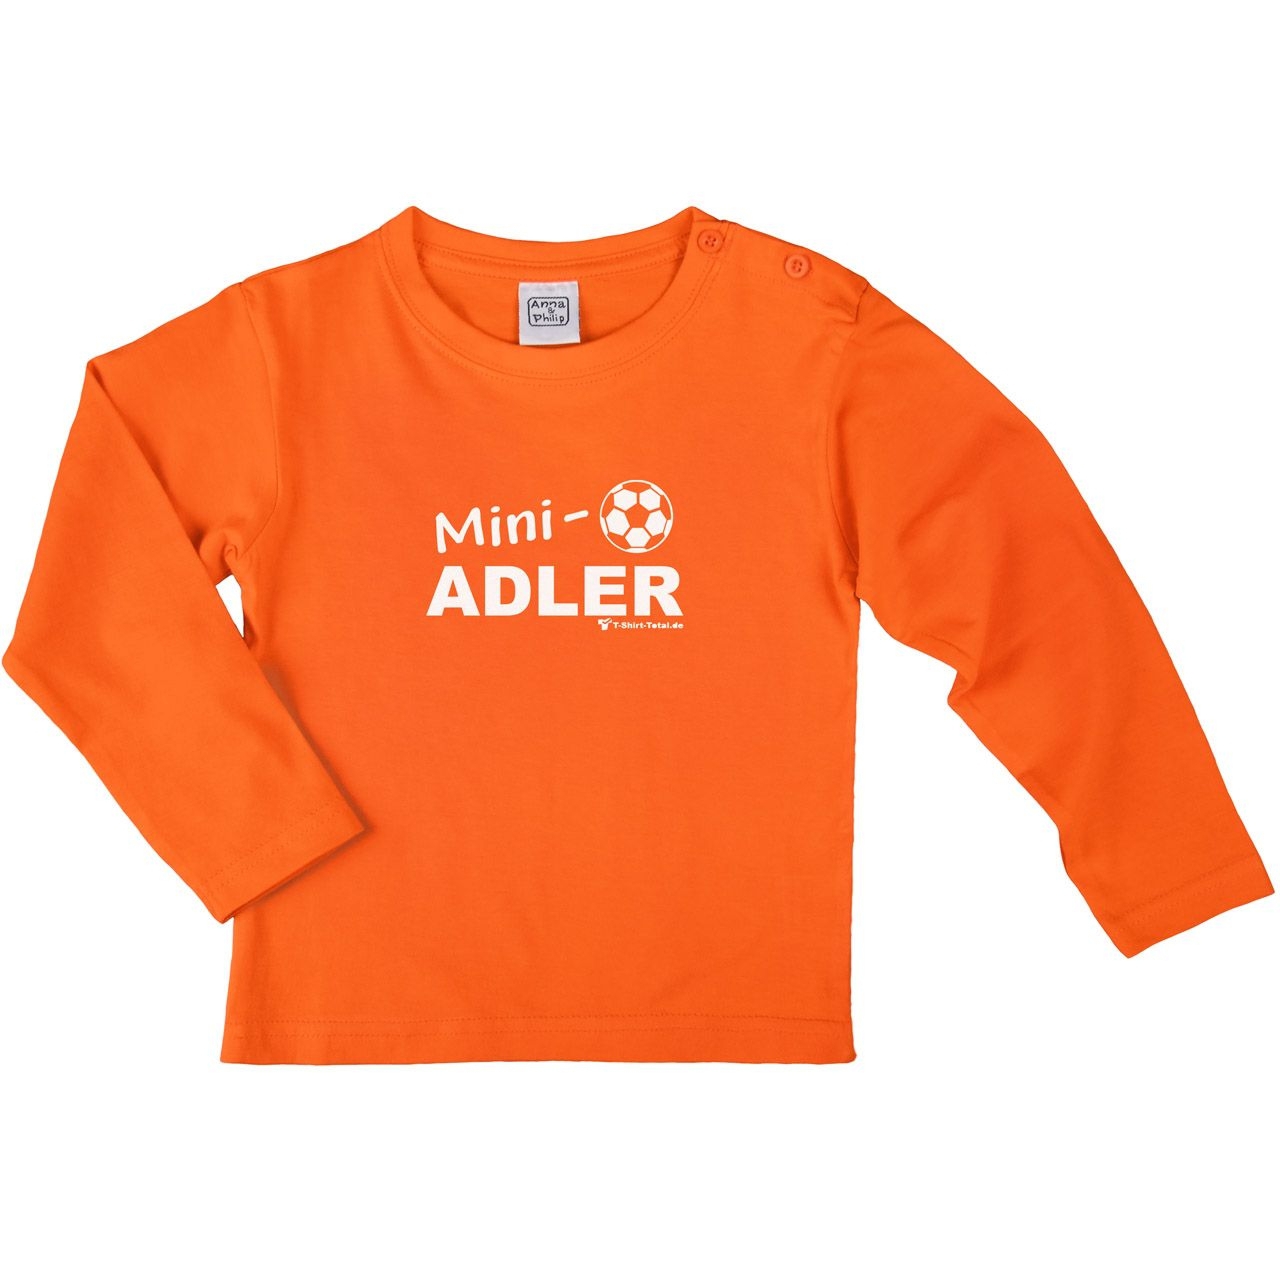 Mini Adler Kinder Langarm Shirt orange 122 / 128